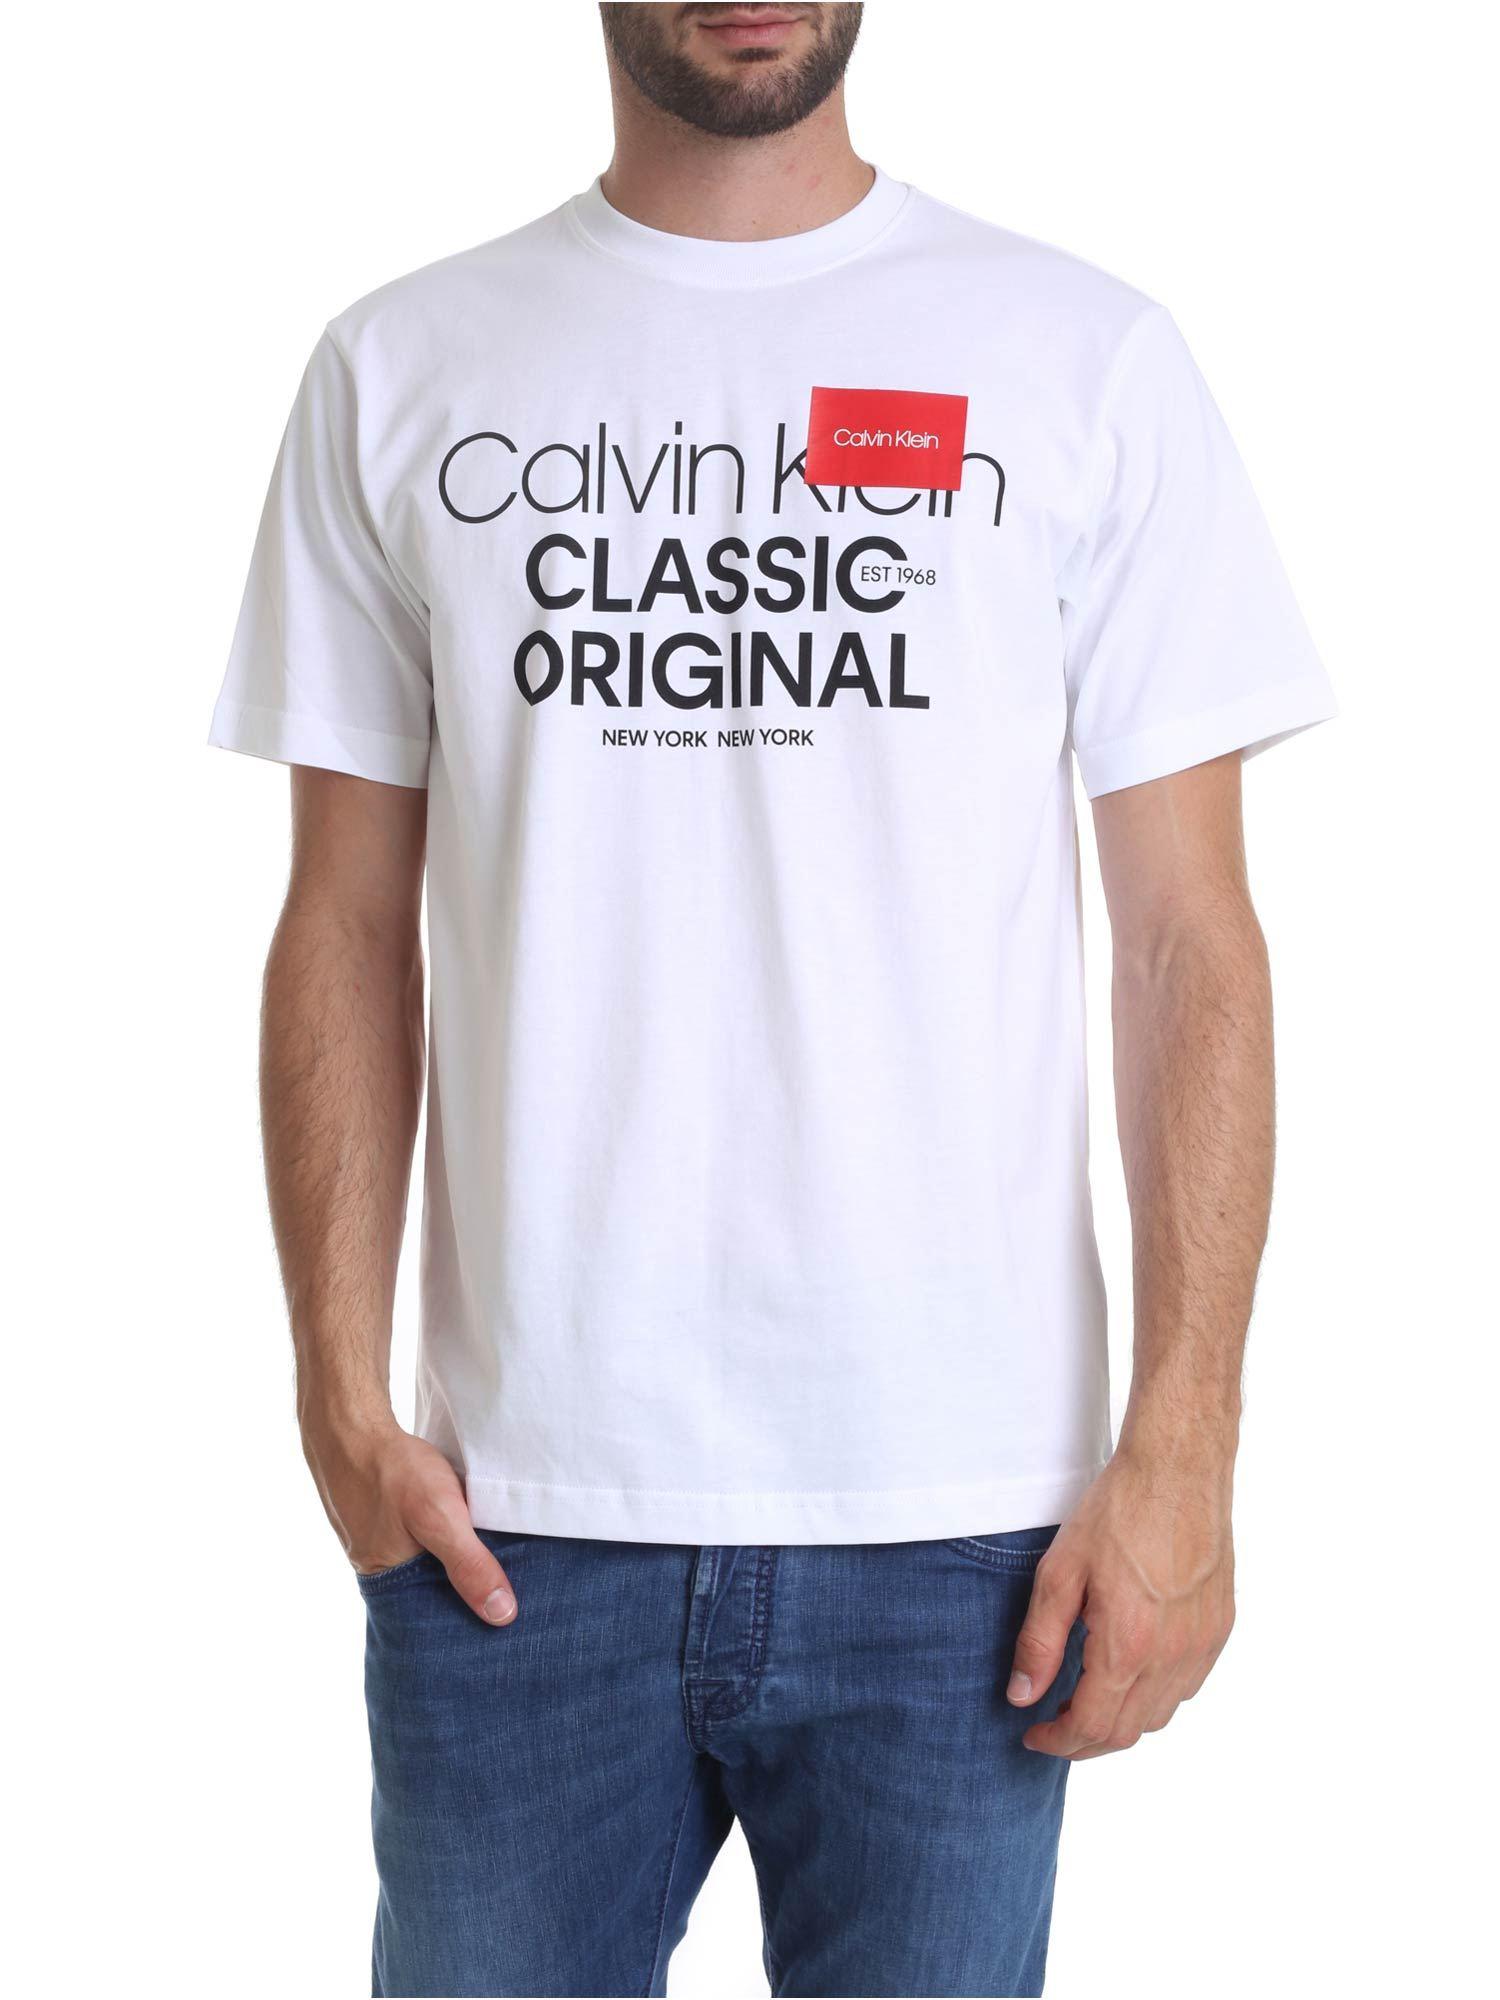 Calvin Klein Classic T Shirt Sweden, SAVE 34% - www.bspmoscoso.com